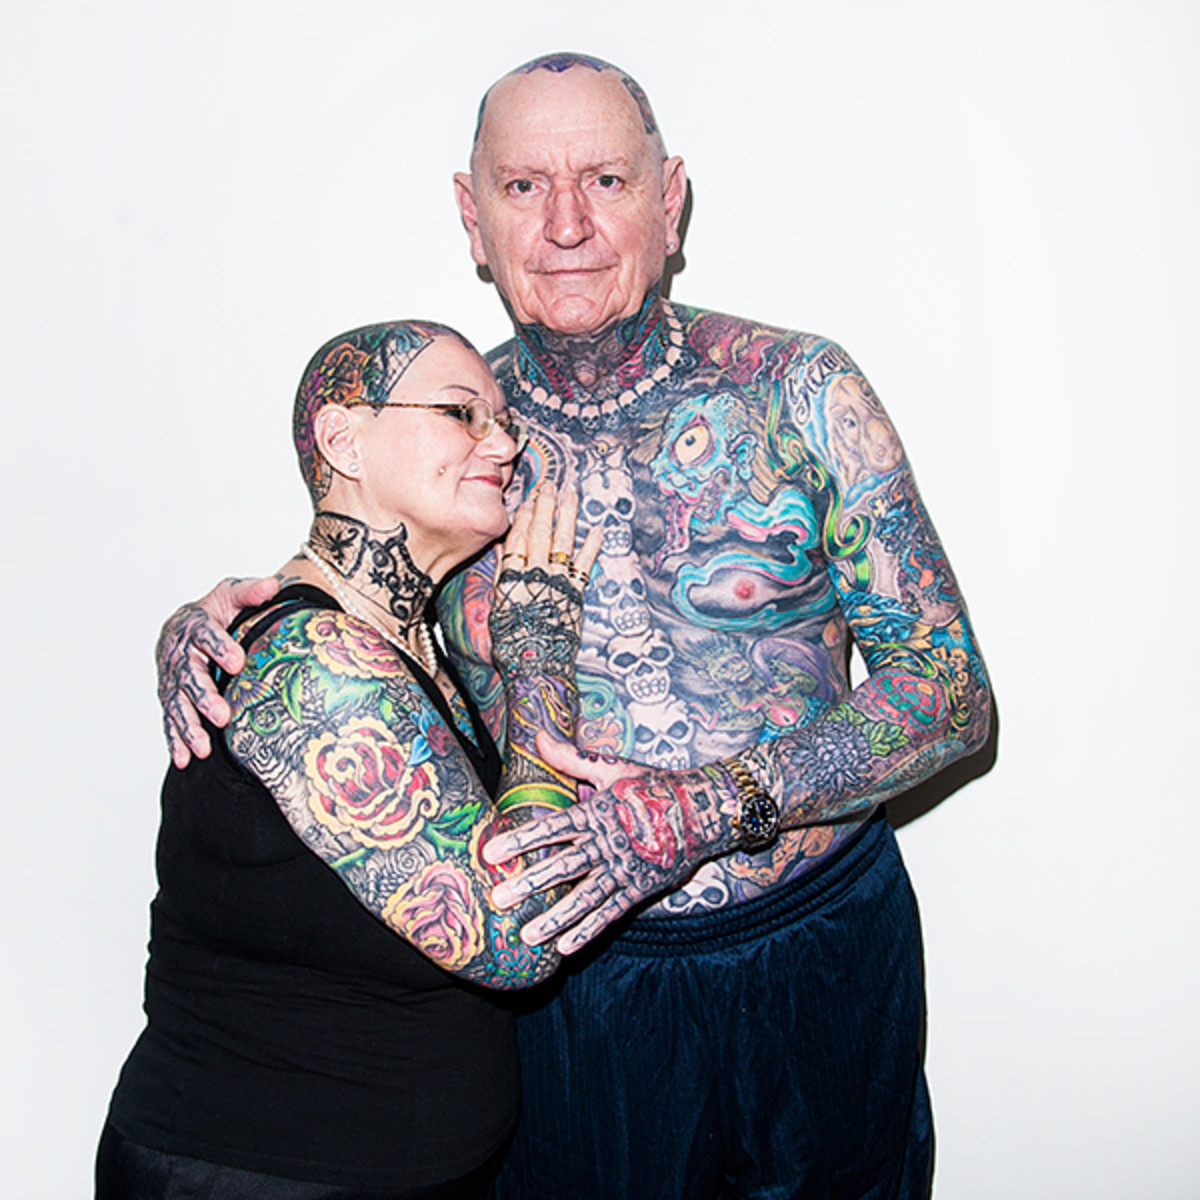 Tattoo Study, Viren Swami, Anglia Ruskin University, Anger and Tattoos, μελέτη συνδέει το θυμό με τα τατουάζ, Inked magazine